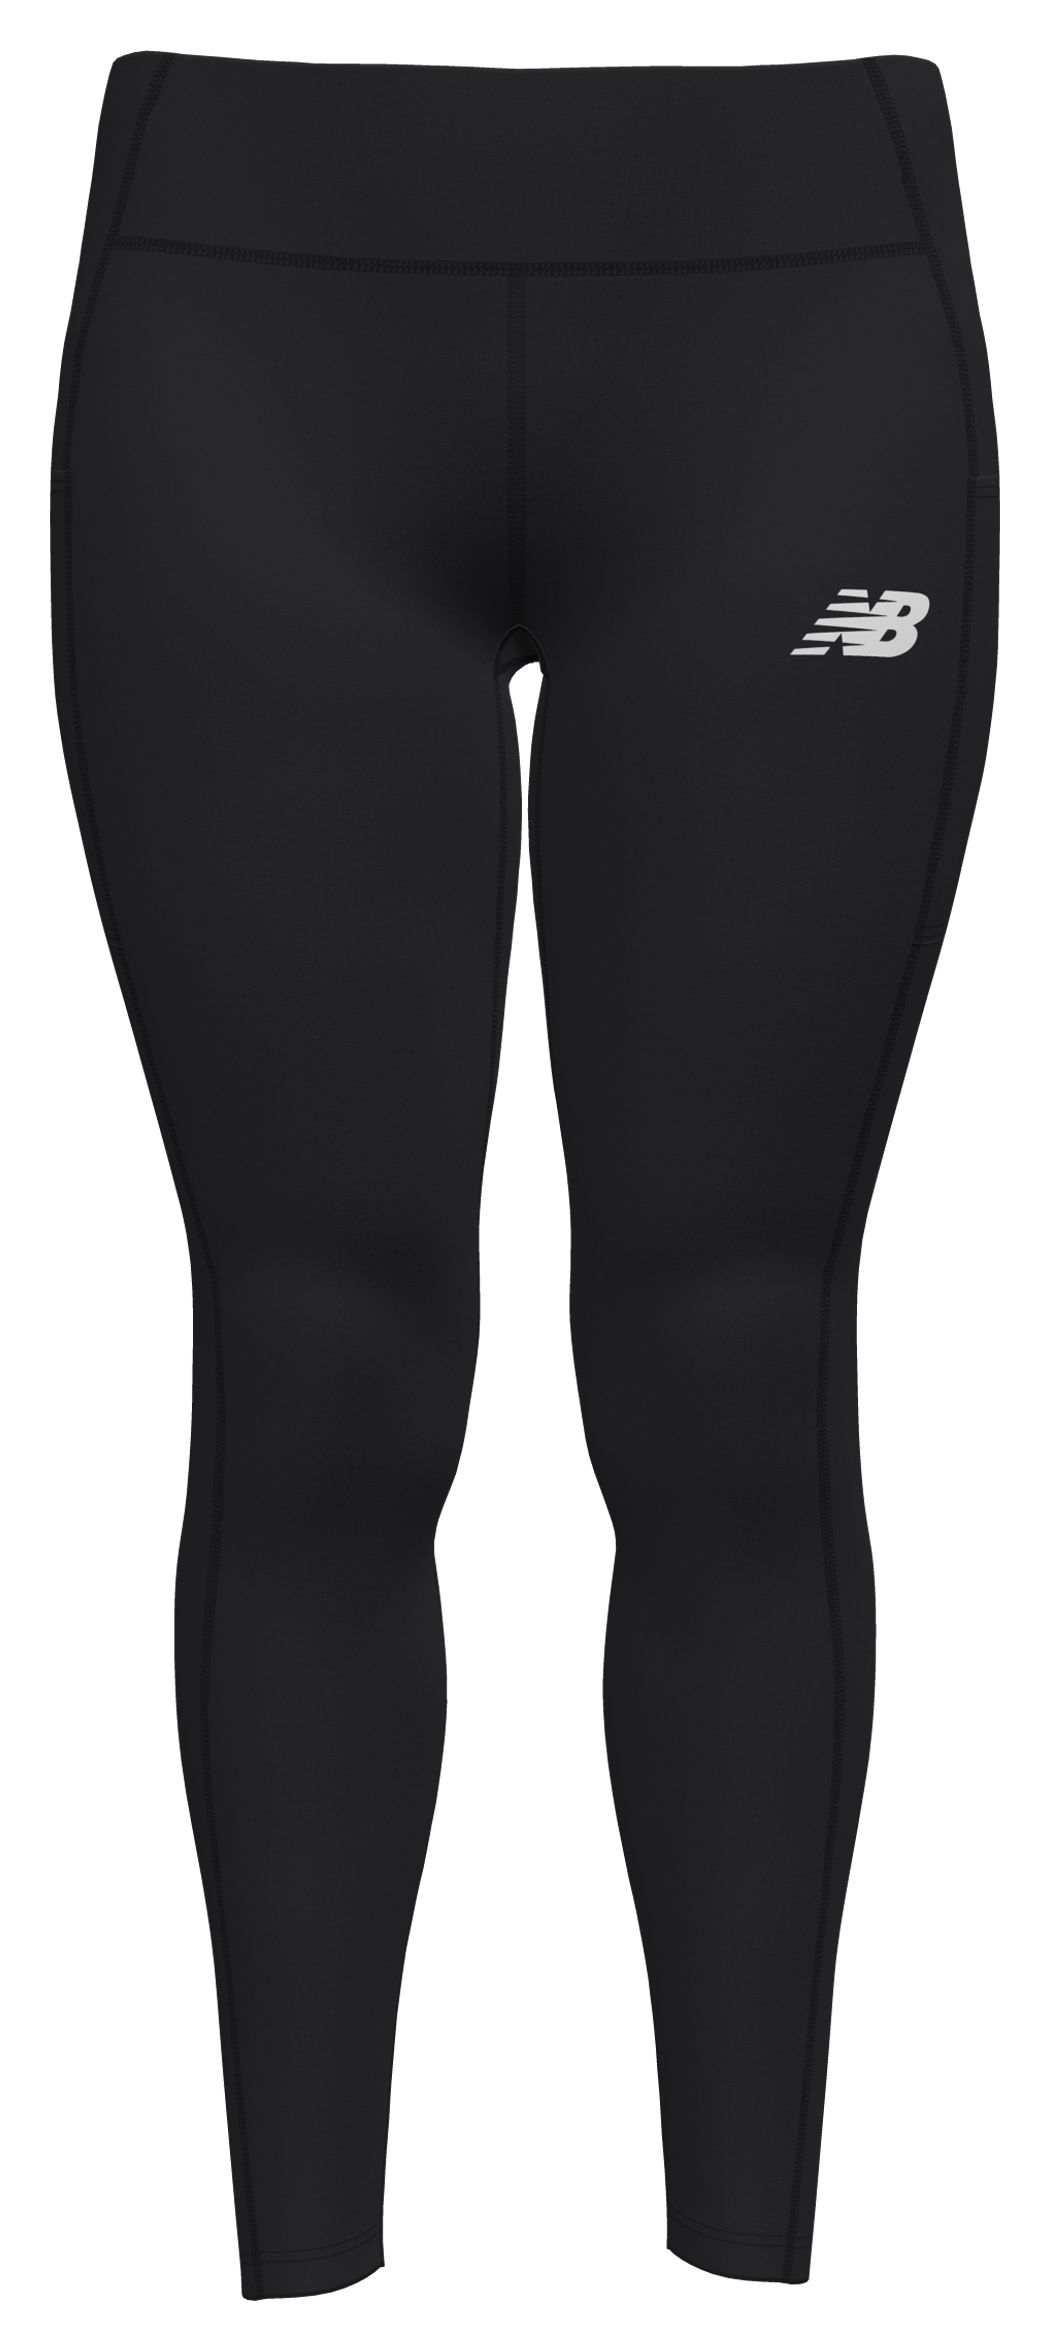 Workout Leggings - Women's Sport Pants - New Balance